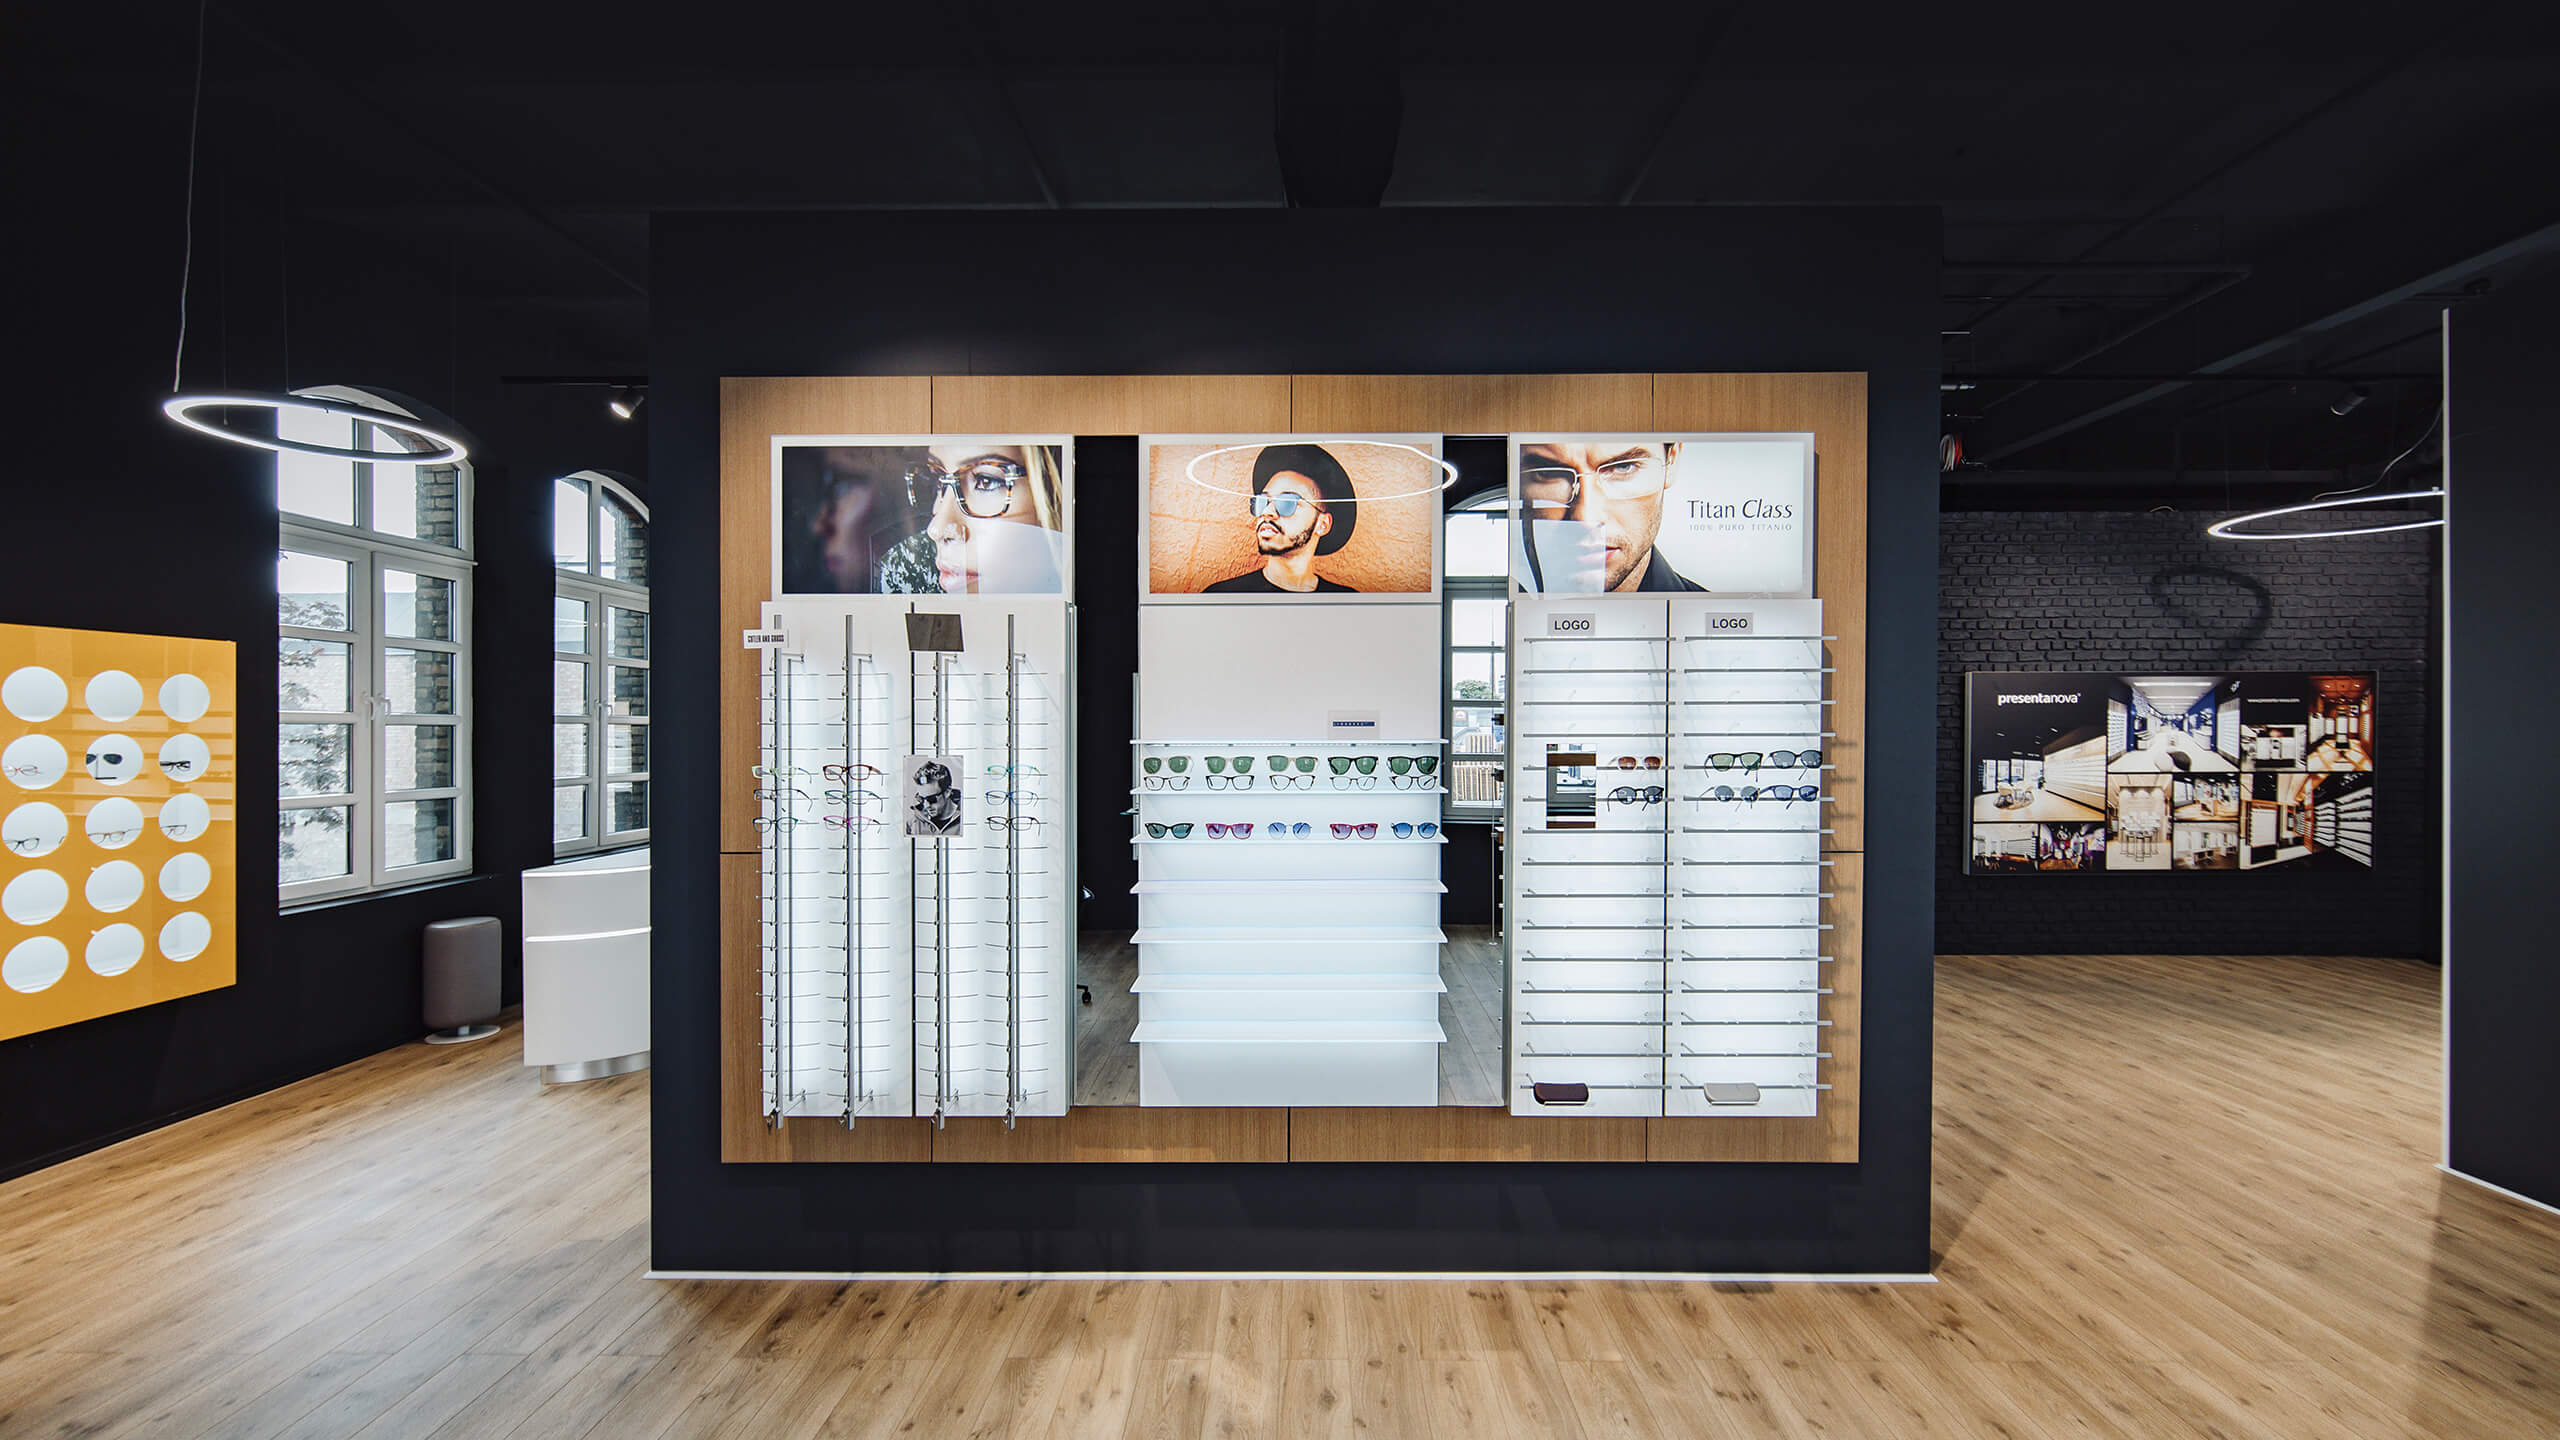 Presenta Nova showroom a Mannheim, Germania